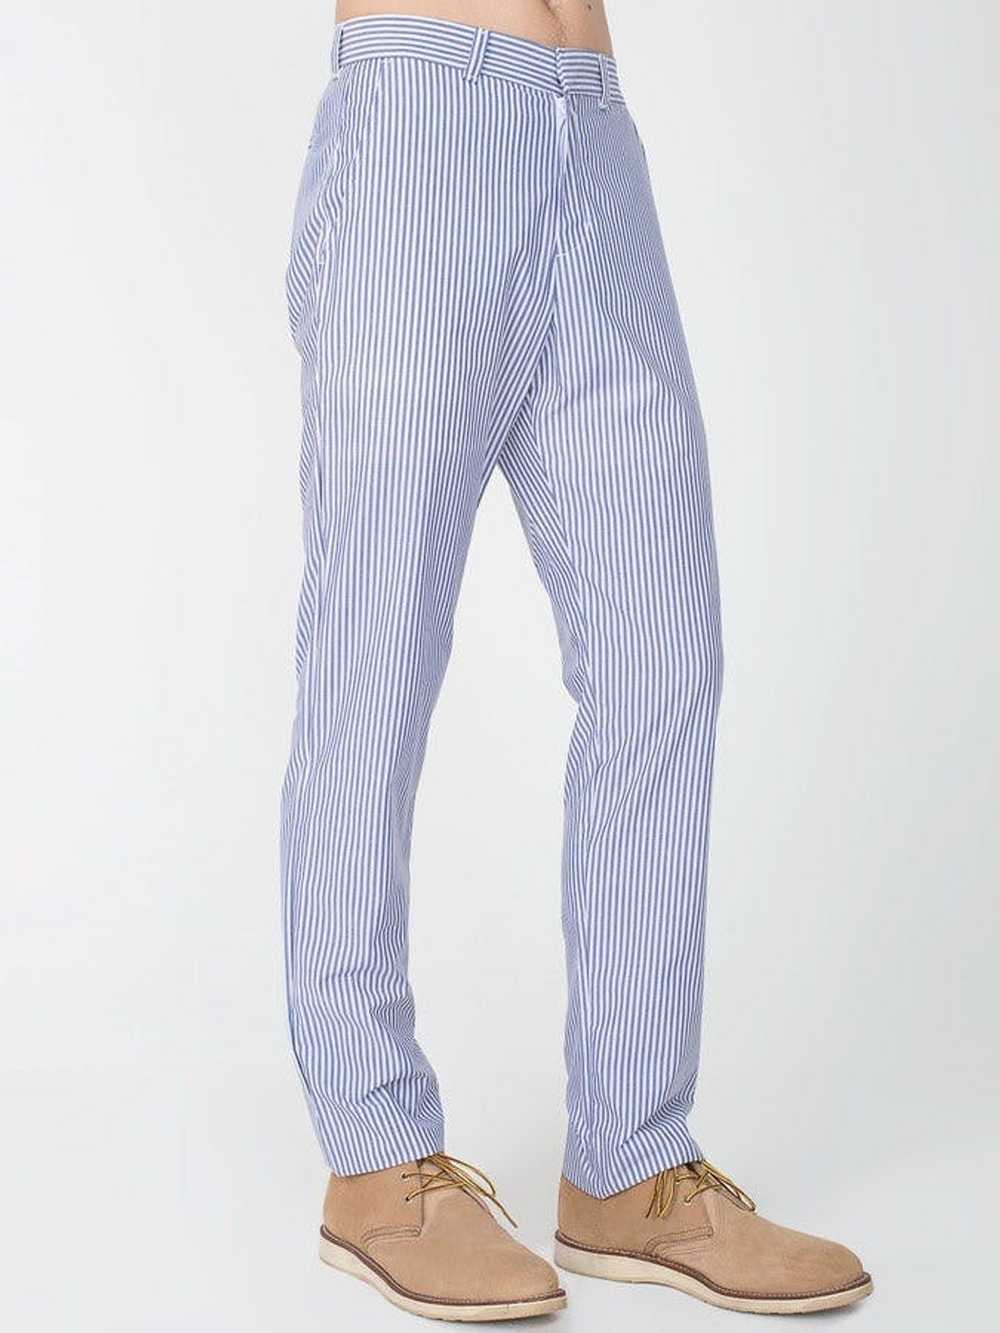 American Apparel Striped Pants - image 1